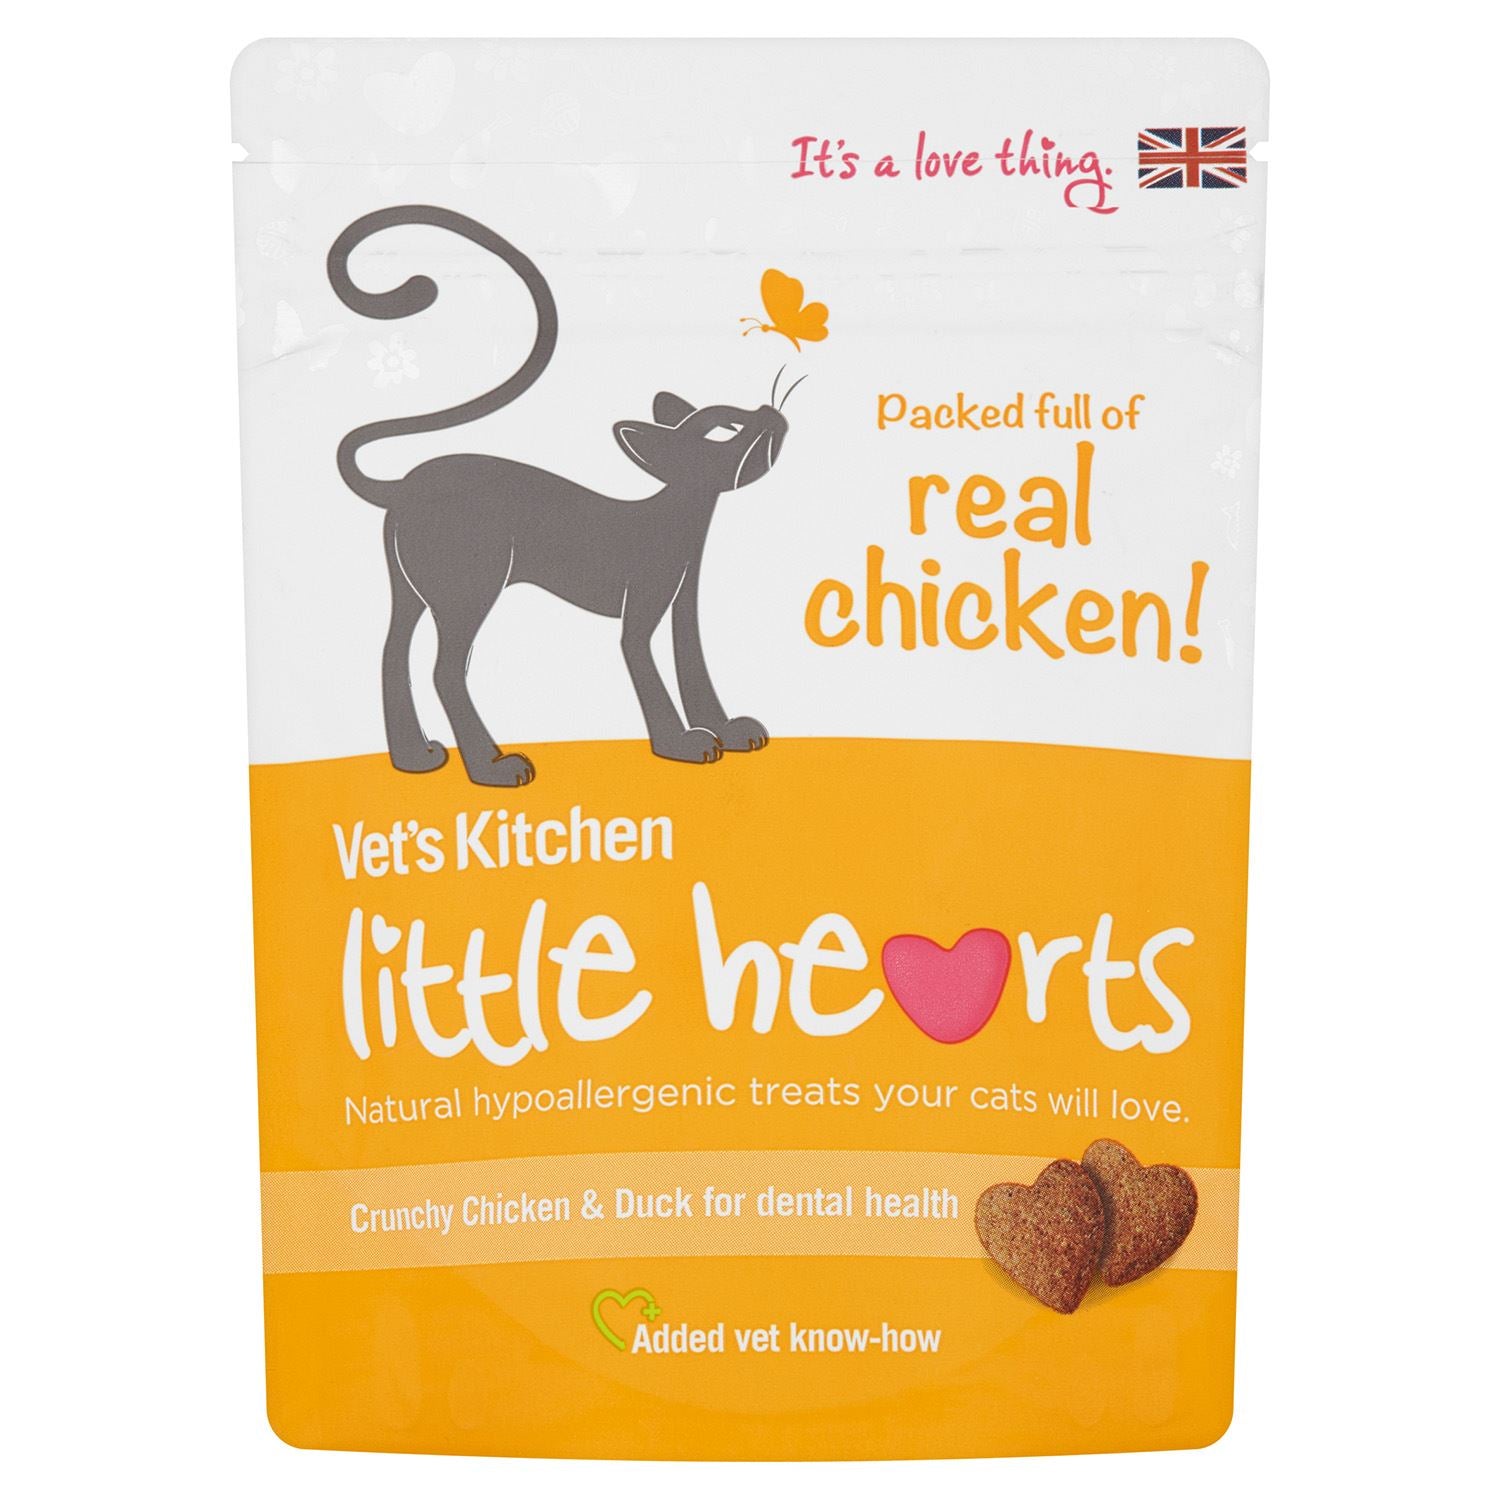 Vets Kitchen Little Hearts Cat Treats Chicken - Just Horse Riders